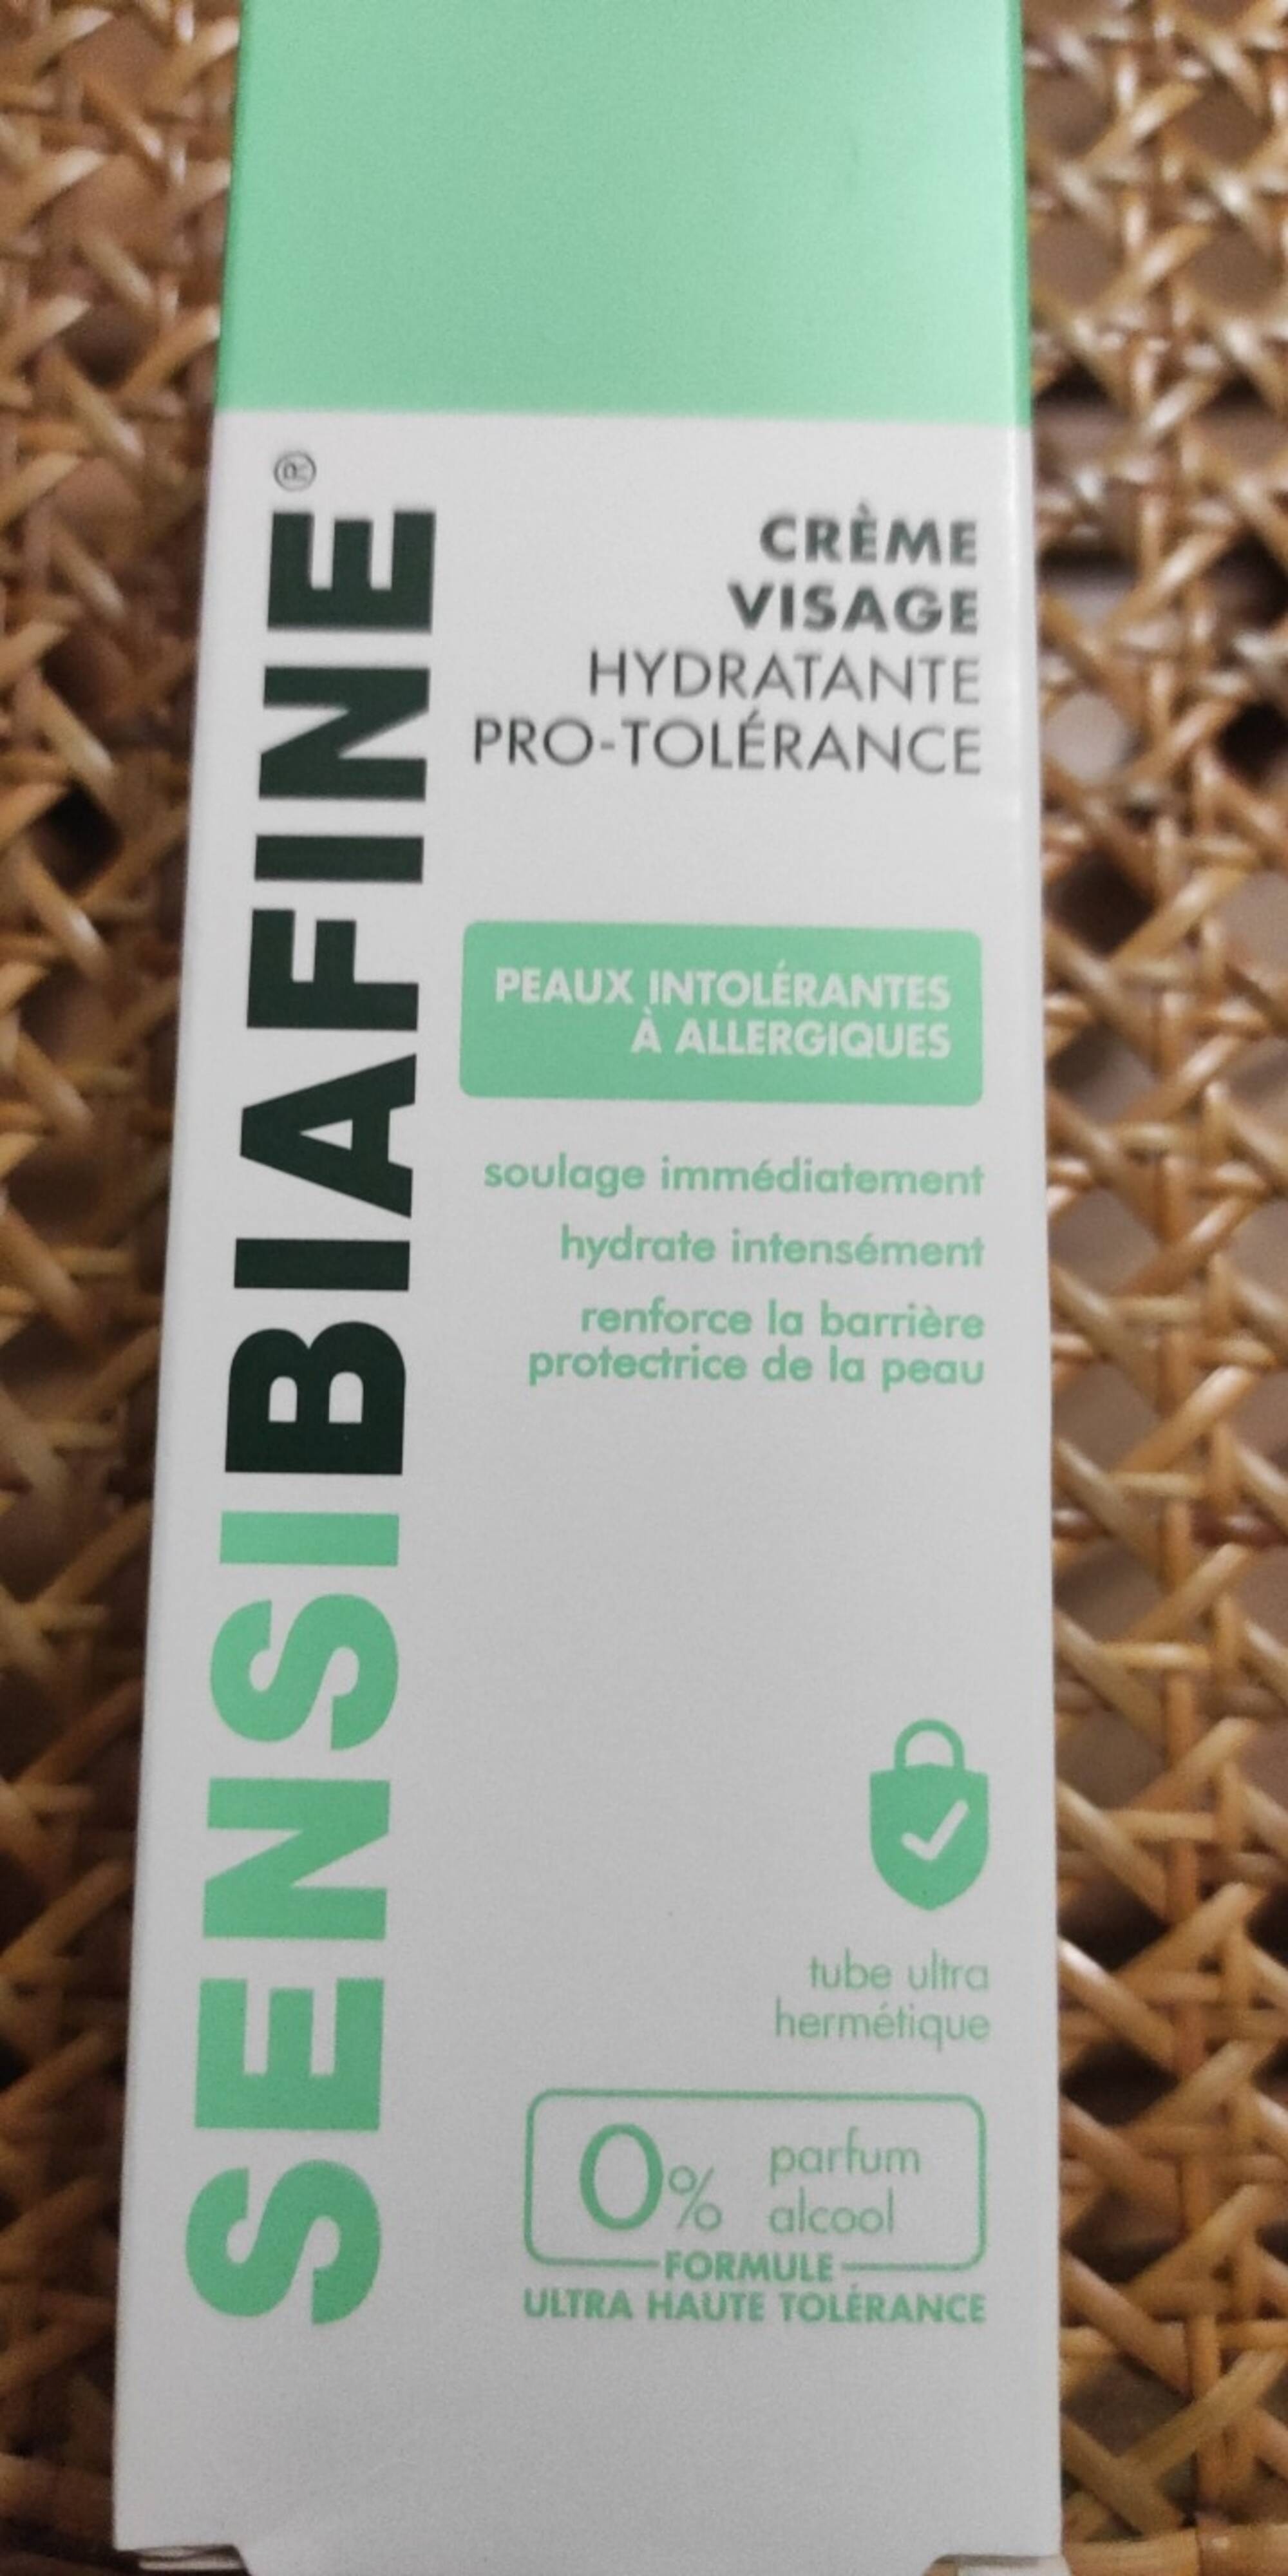 SENSIBIAFINE® Crème Visage Hydratante PRO-TOLÉRANCE